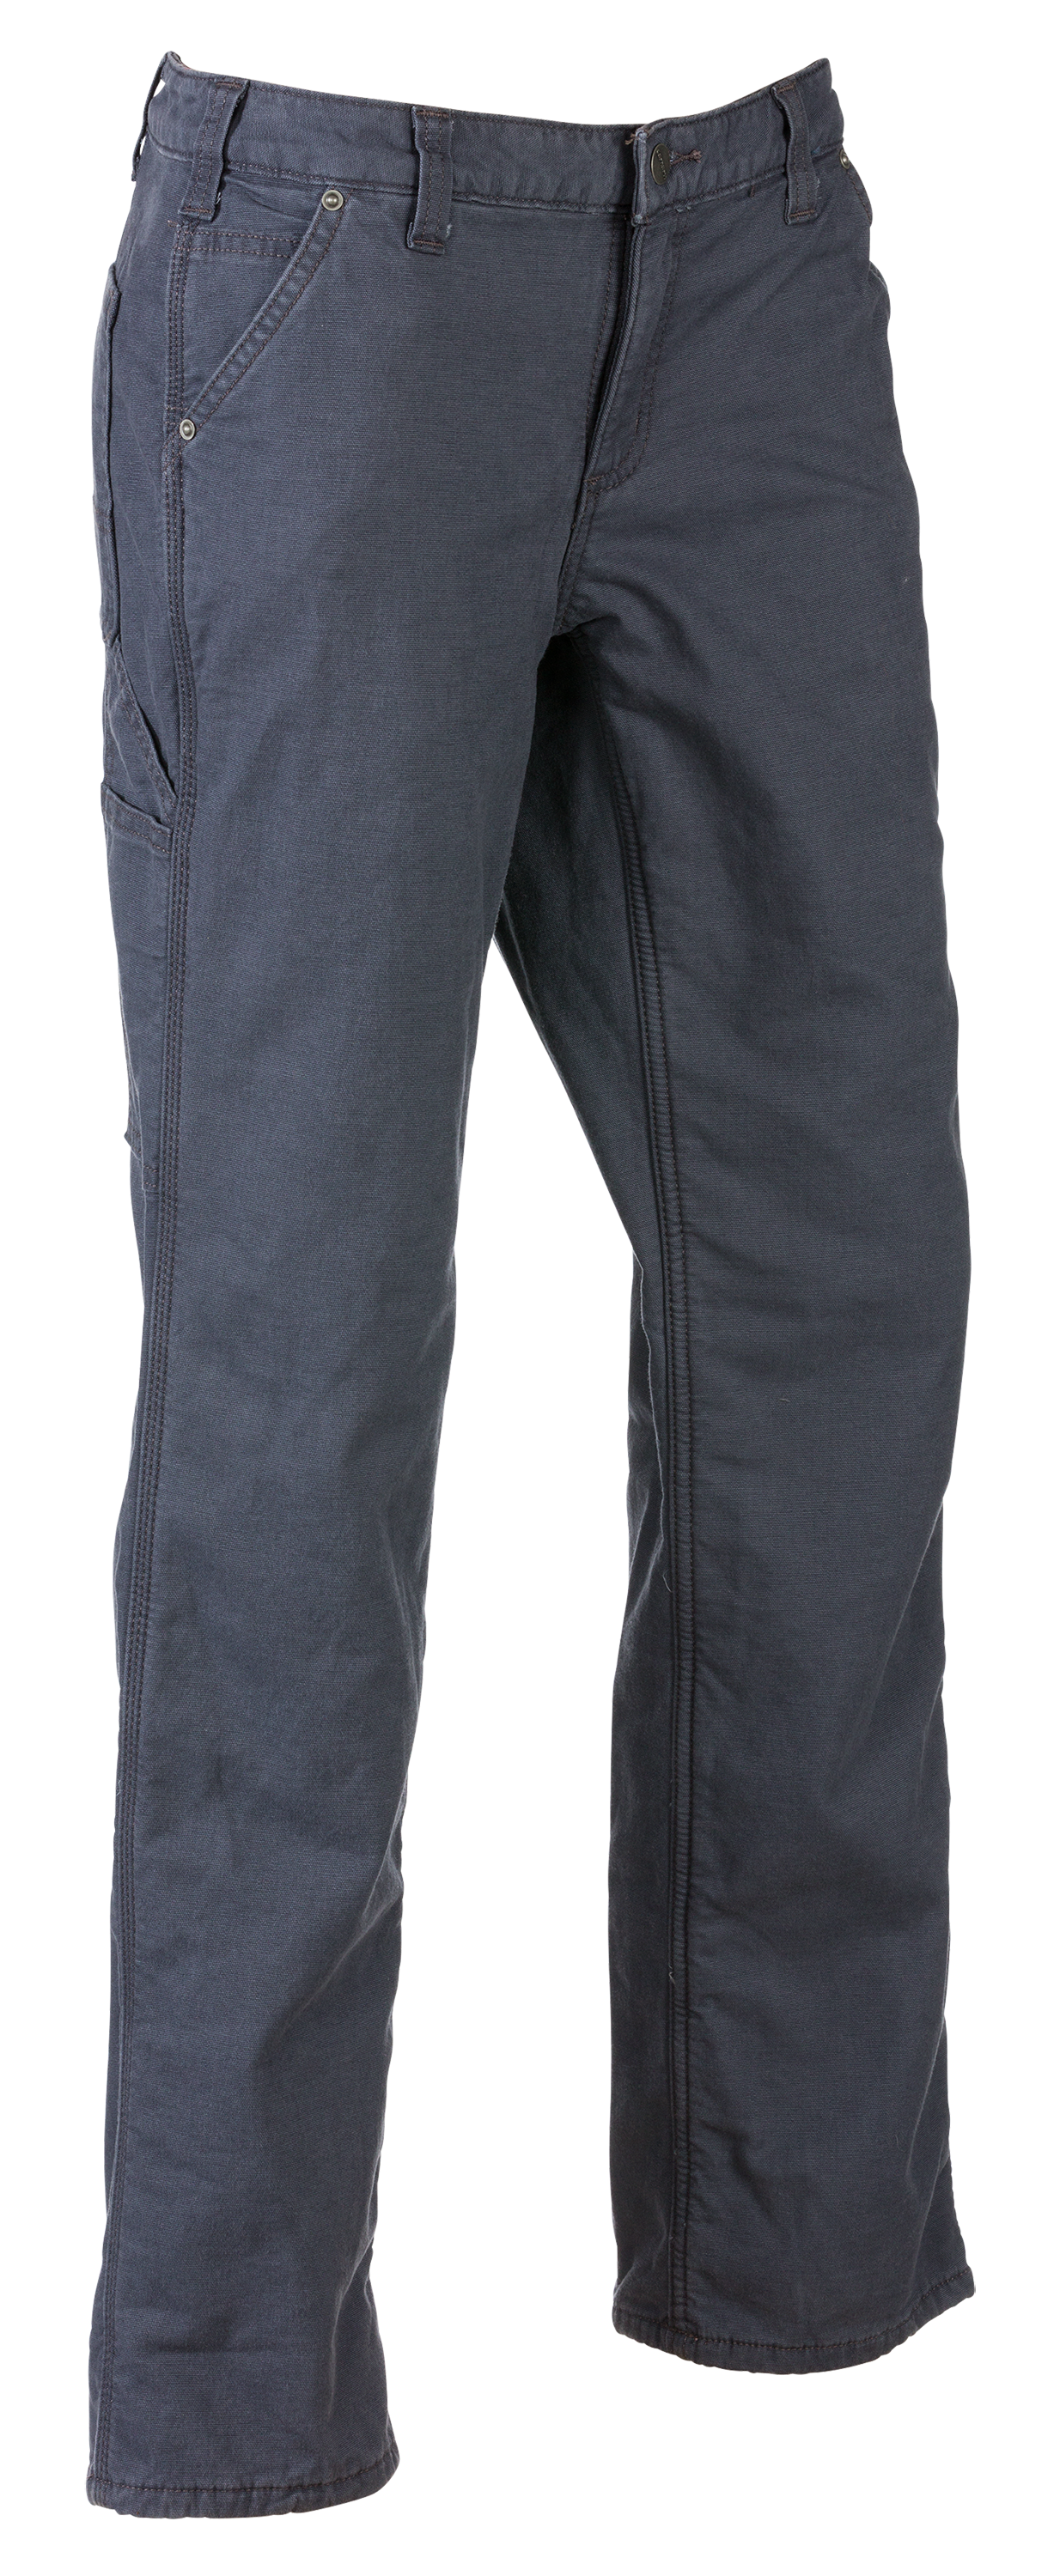 Women's Fleece-Lined Crawford Pants